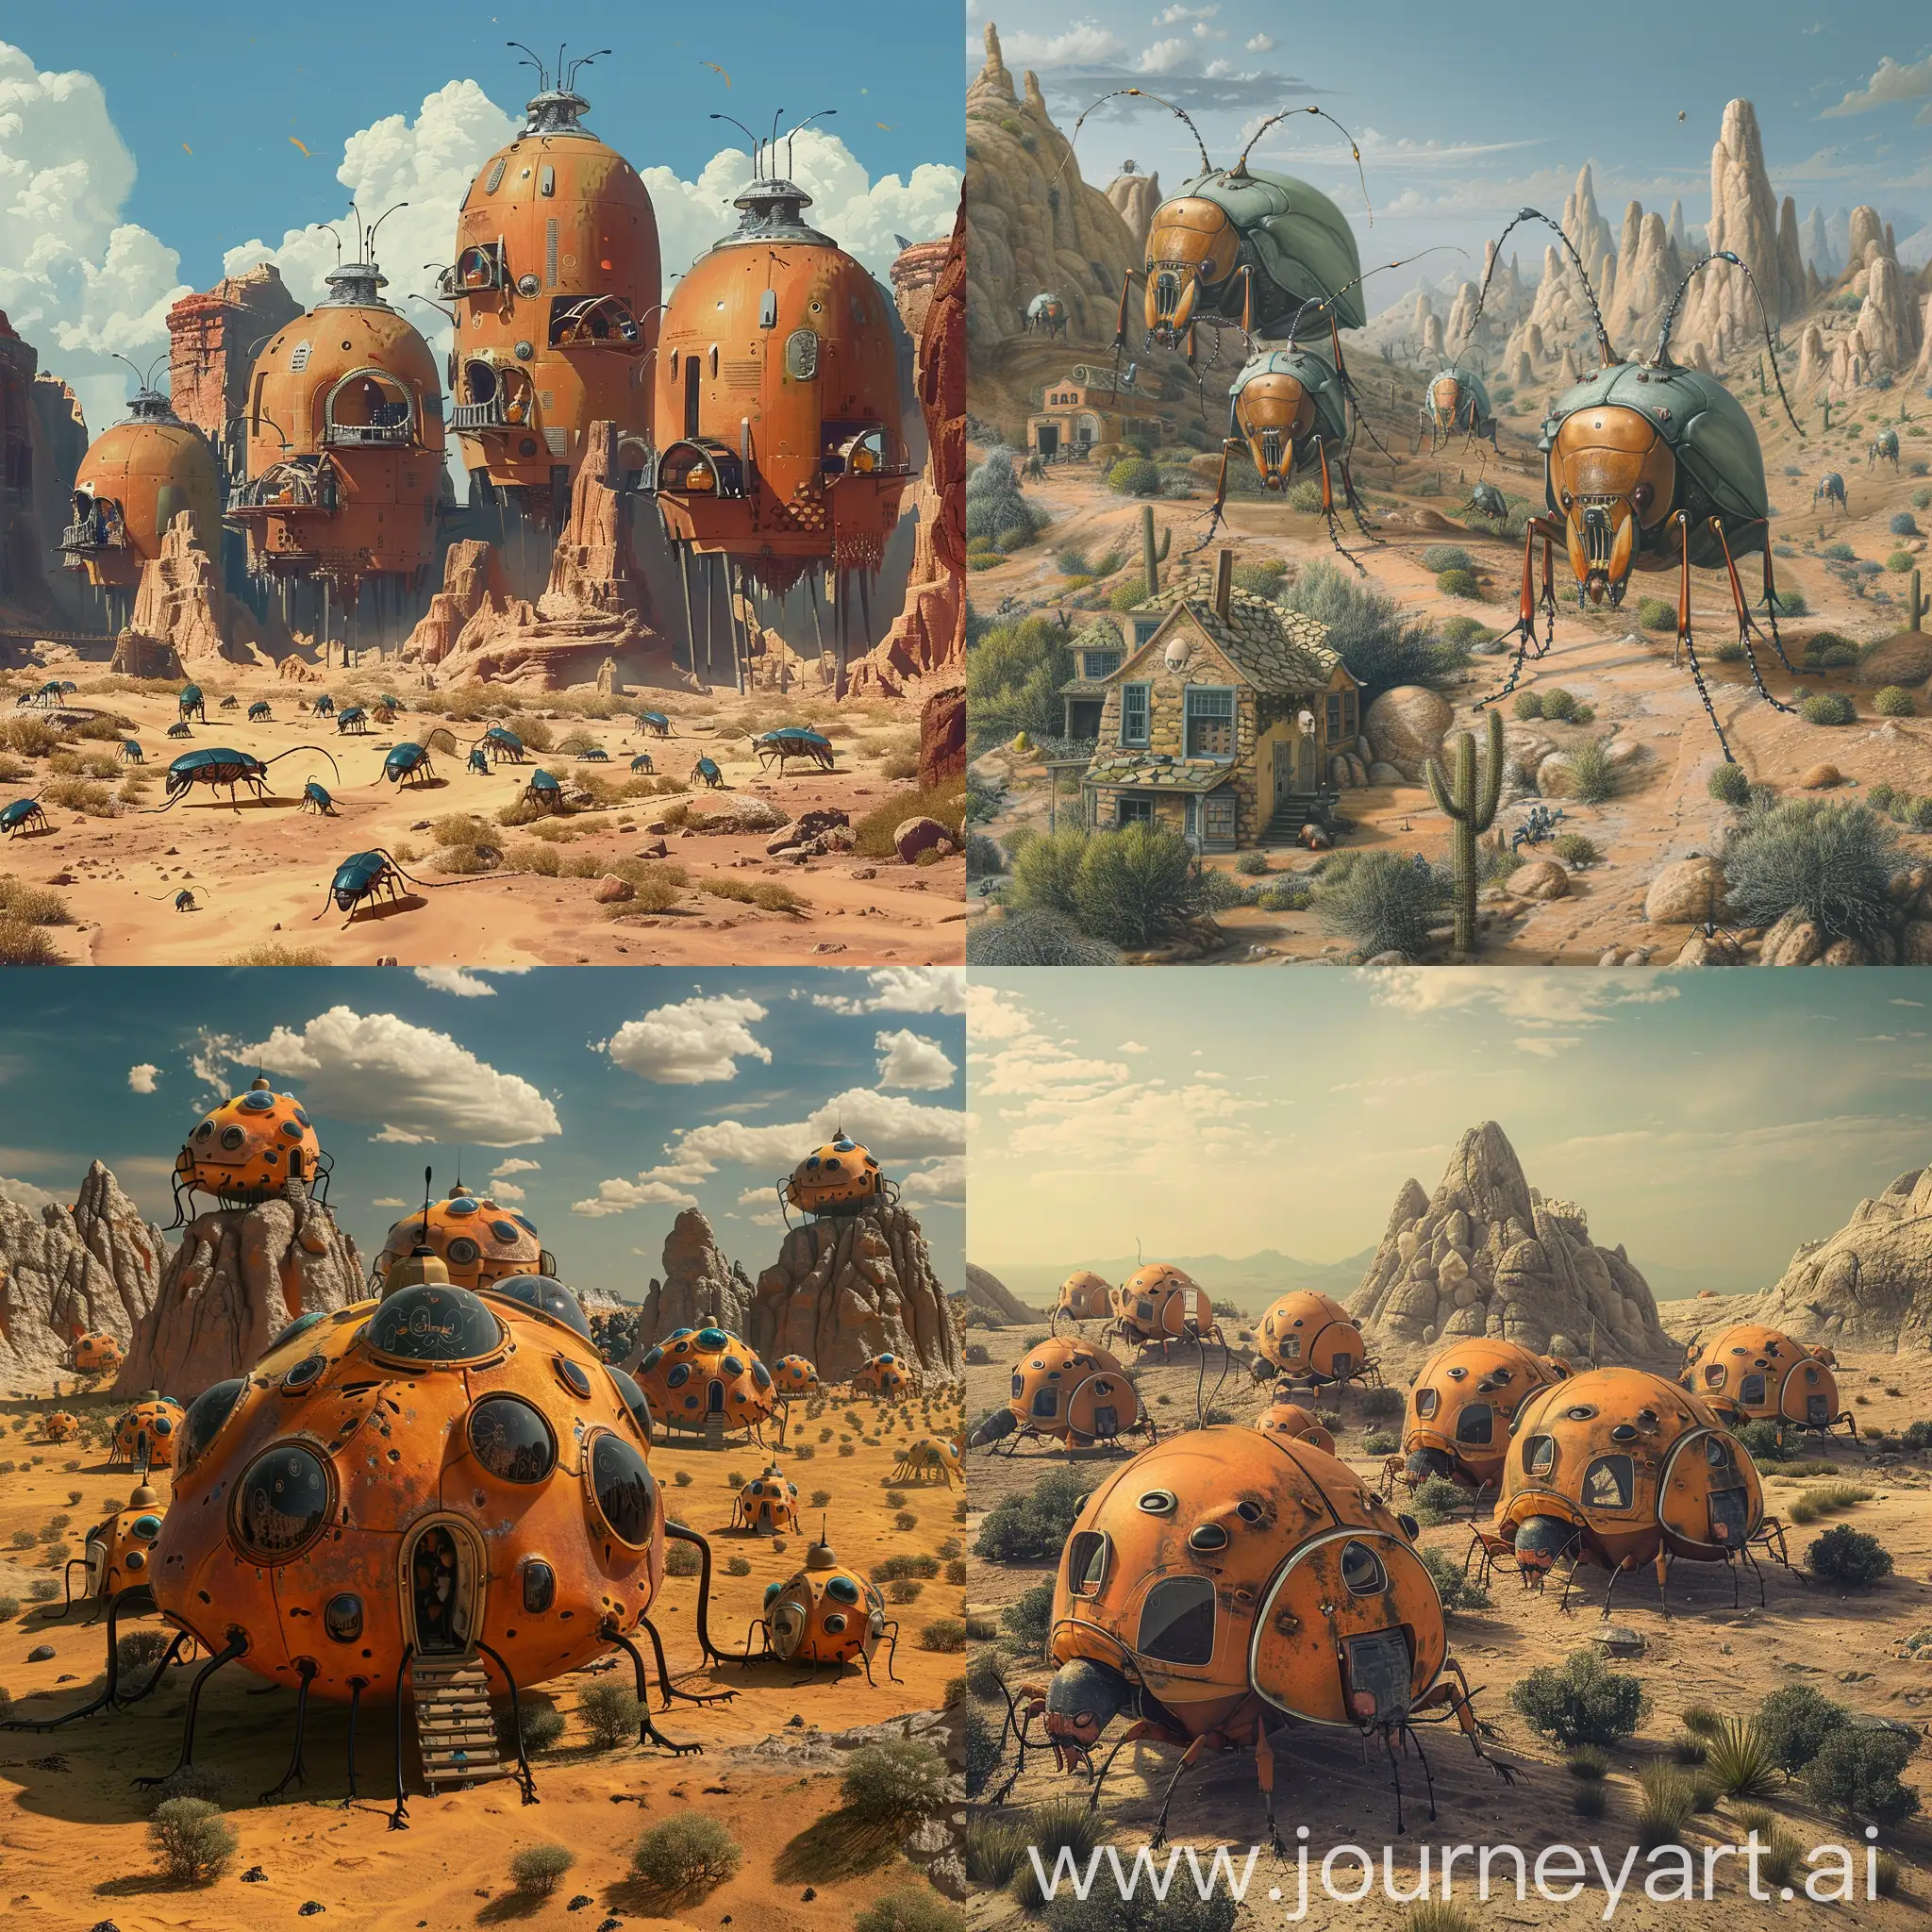 Desert with houses of humanoid beetles